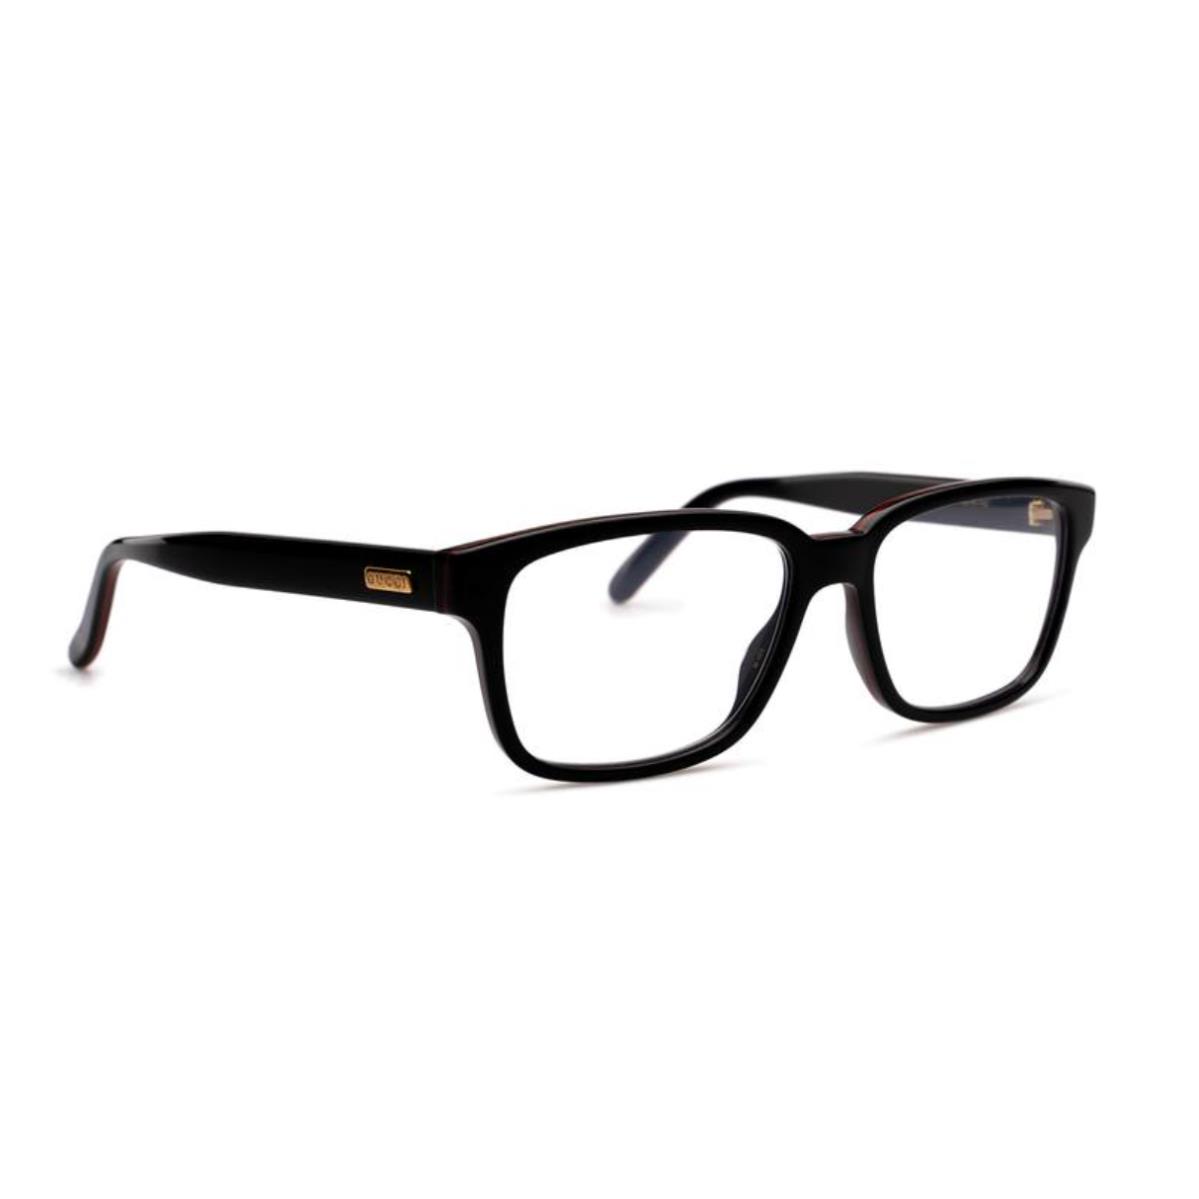 Gucci Eyeglasses GG0272O 001 53-16 145 Black Rectangular Frames W/gold Logos